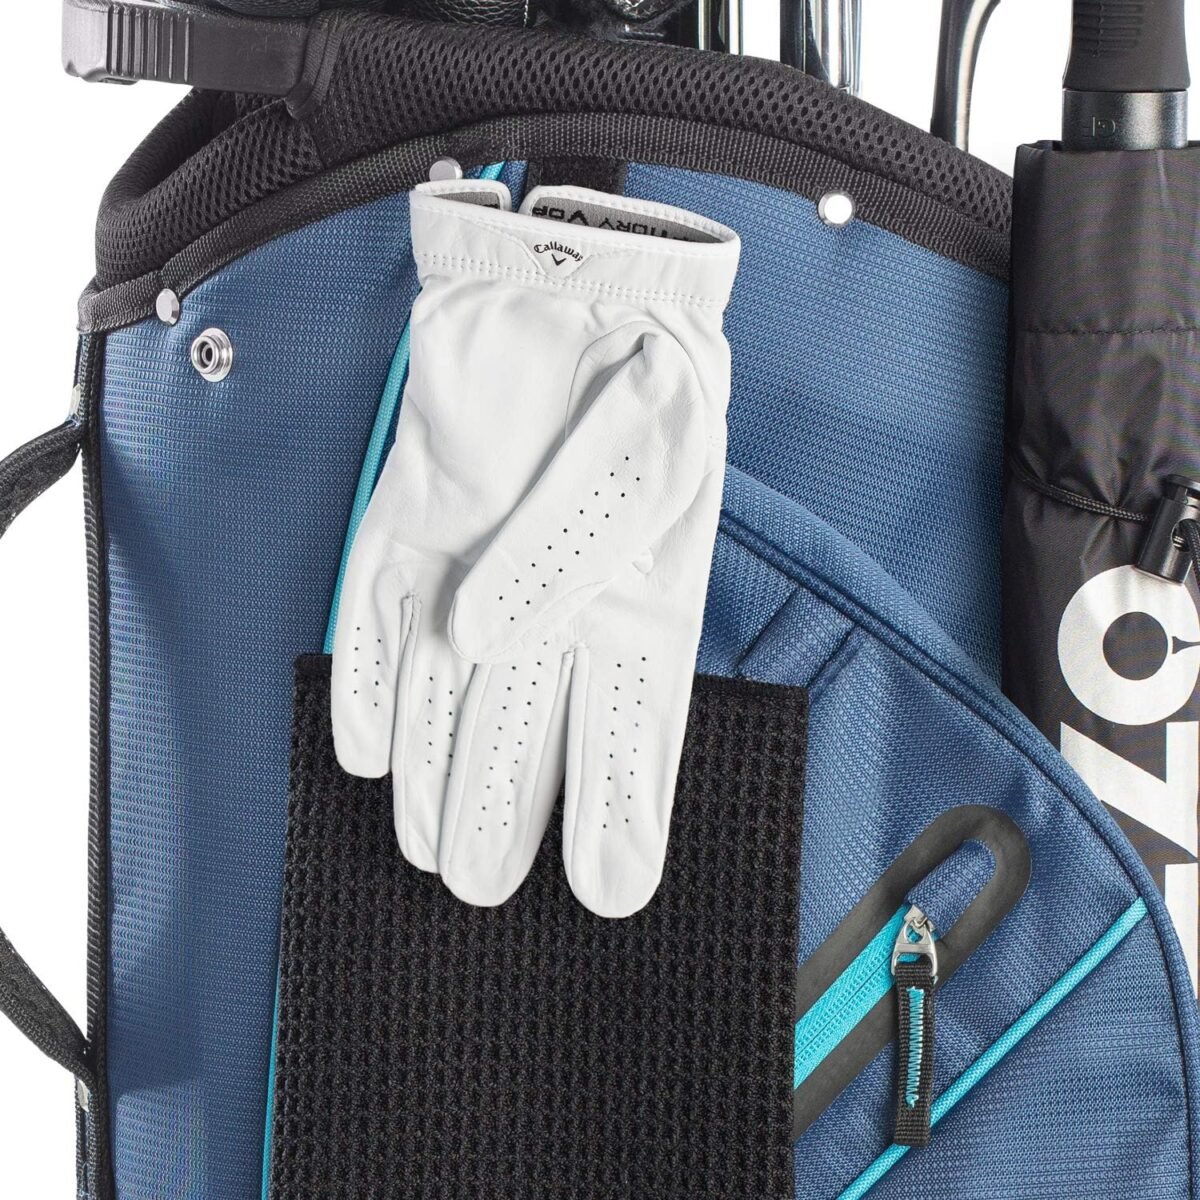 Comparing 5 Lightweight Golf Bags: Izzo Ultra-Lite, Izzo Ultra Lite Cart Bag, Sunday Golf Loma XL Bag, Nike Sport Lite, KVV Lightweight